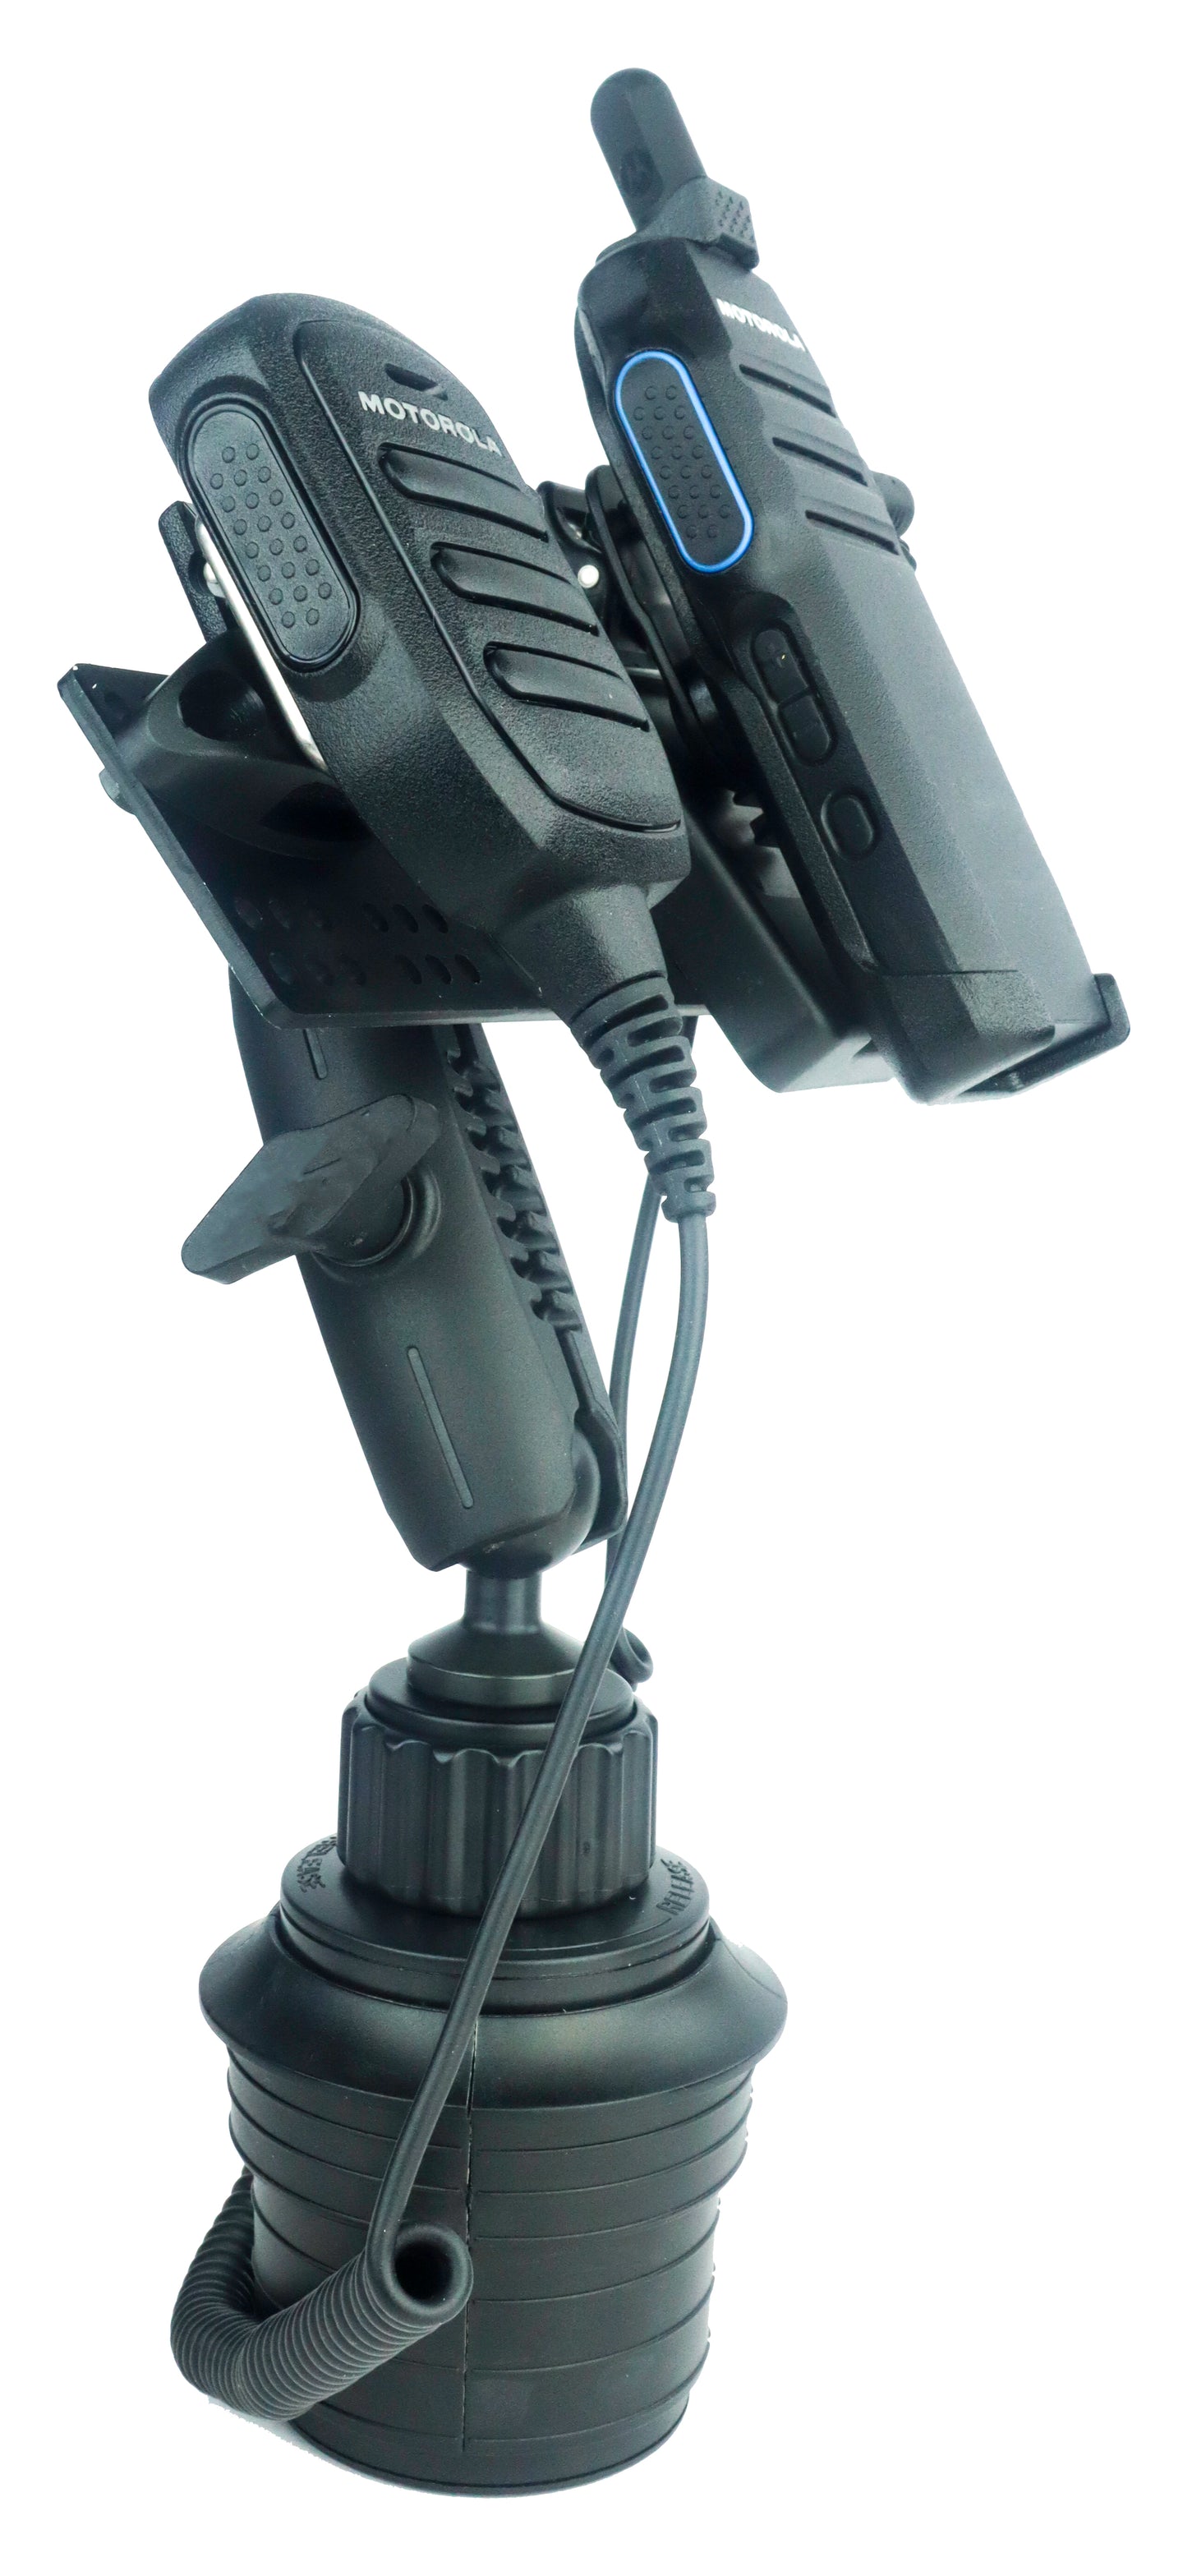 Industrial Fleet Cup Holder Mount With Microphone holder for Motorola Wave TLK100 And SL300